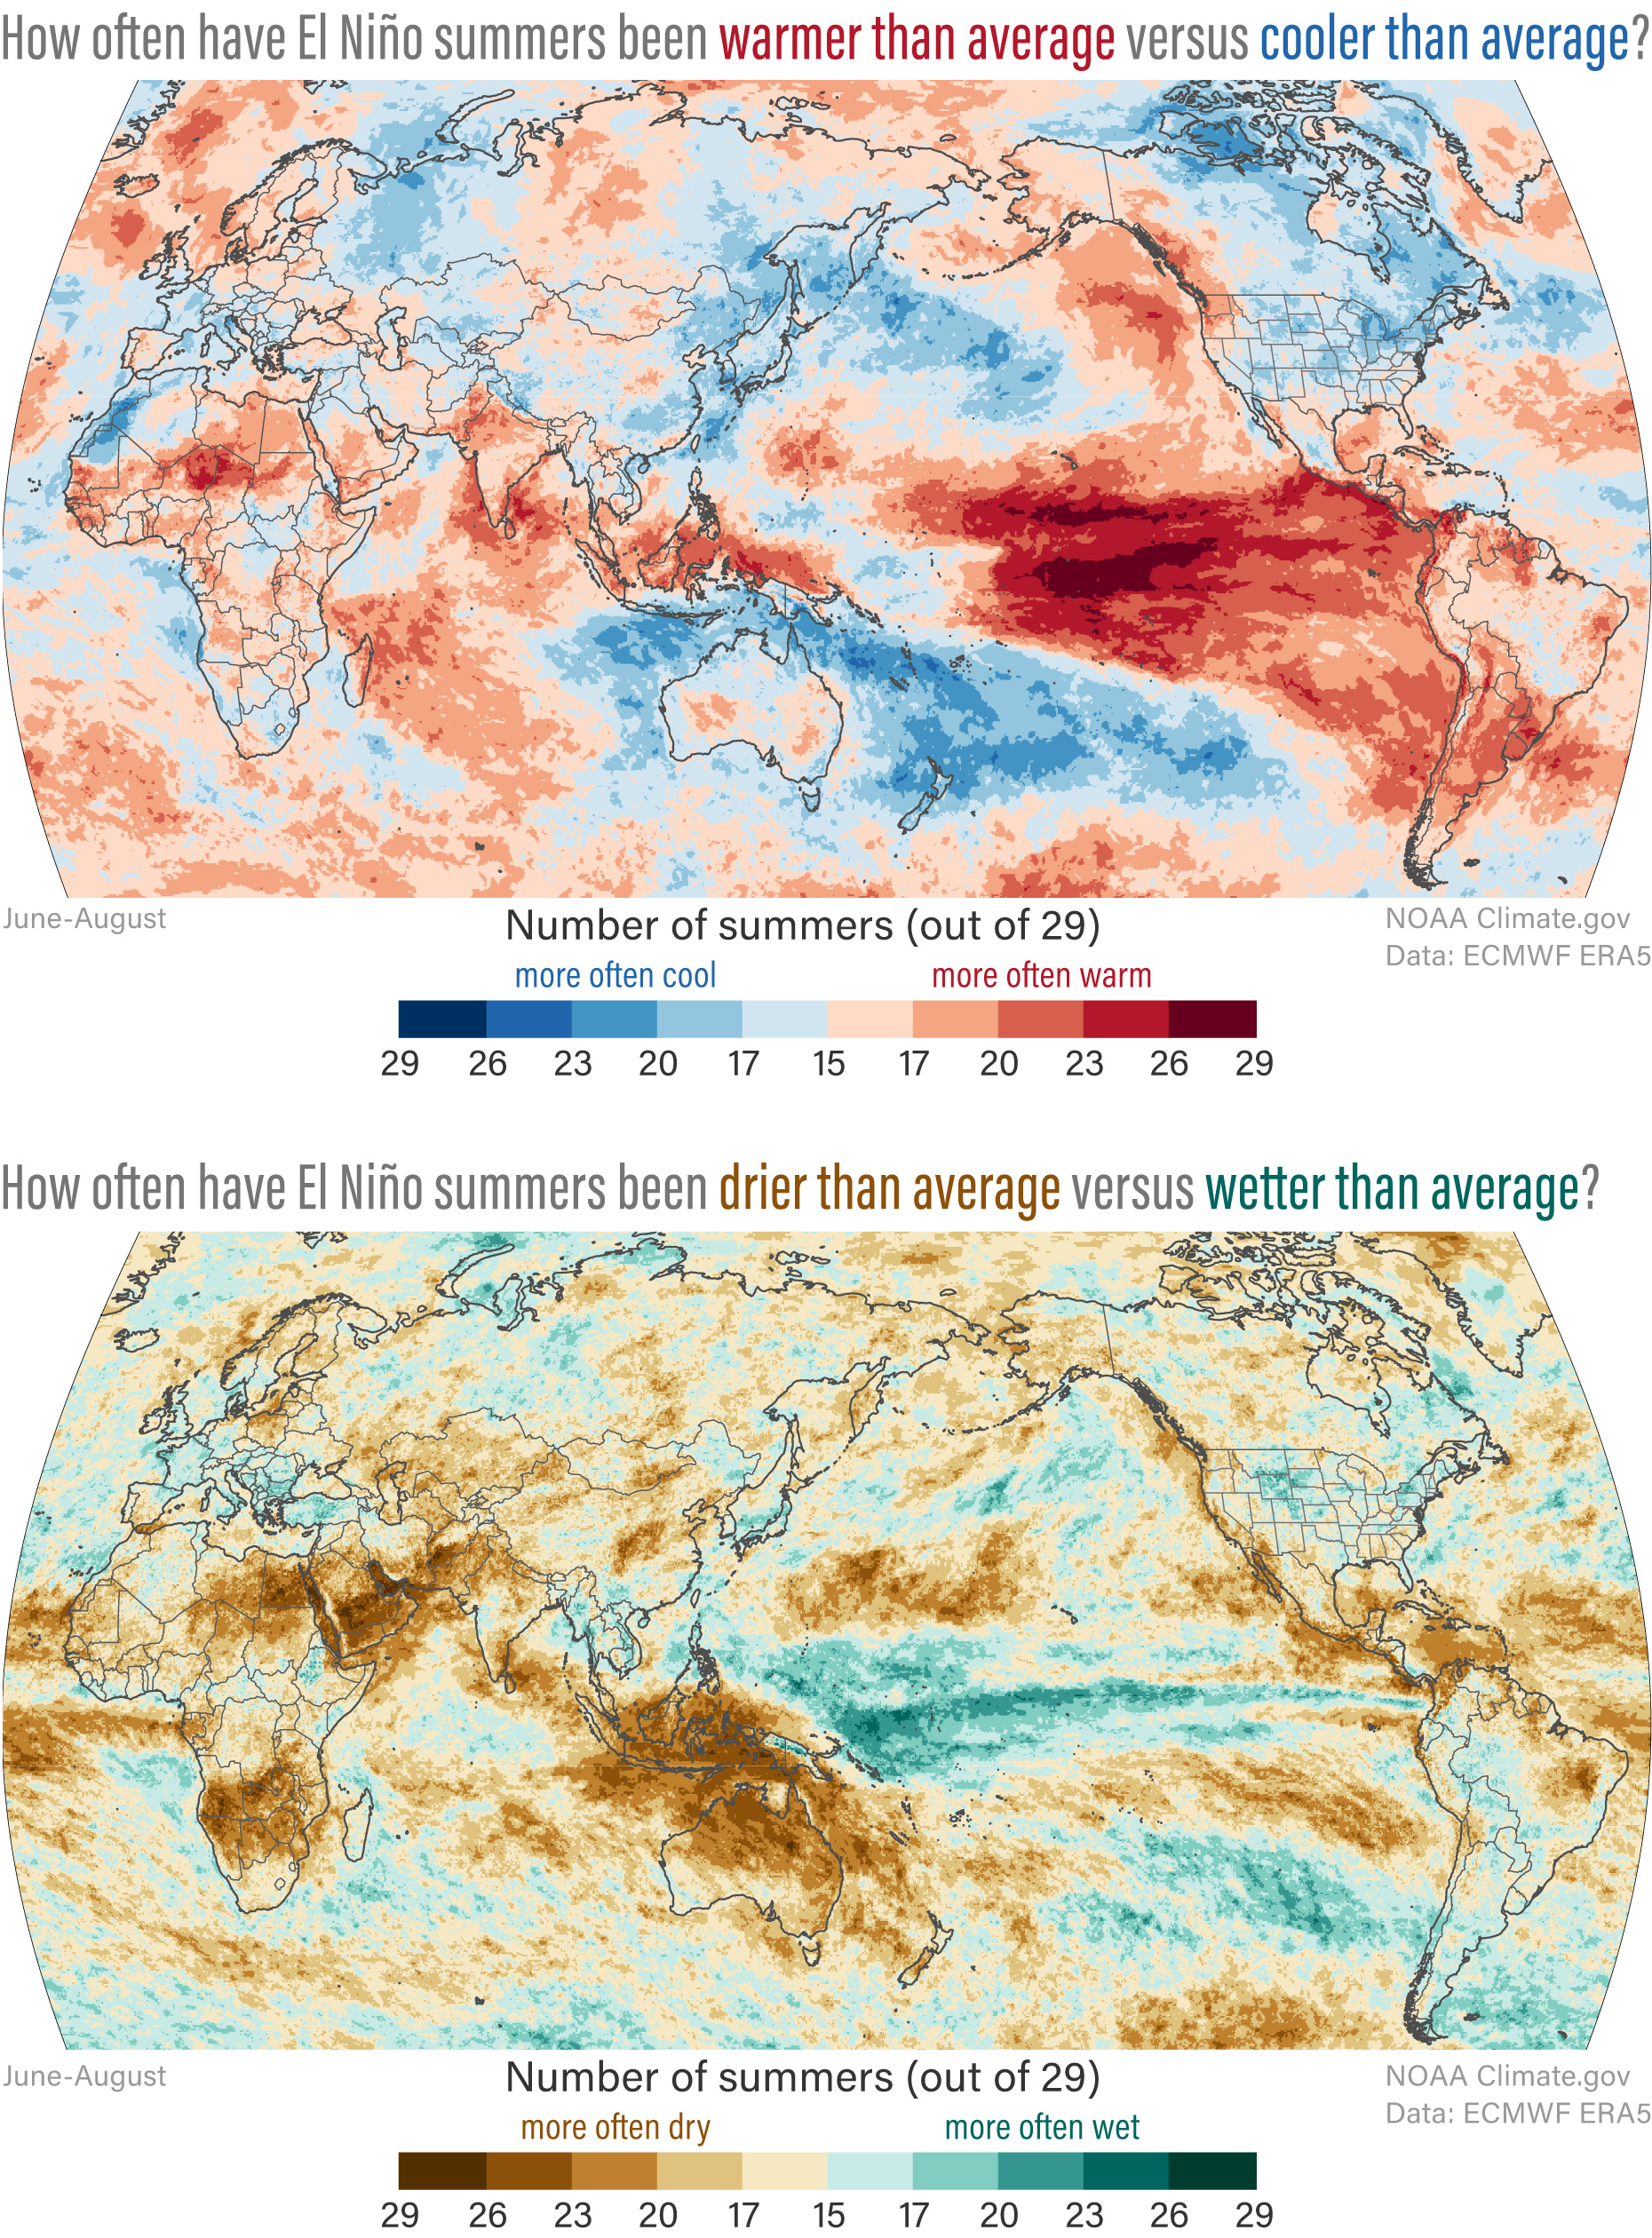 Historically, how has El Niño influenced summer temperature and precipitation around the world?